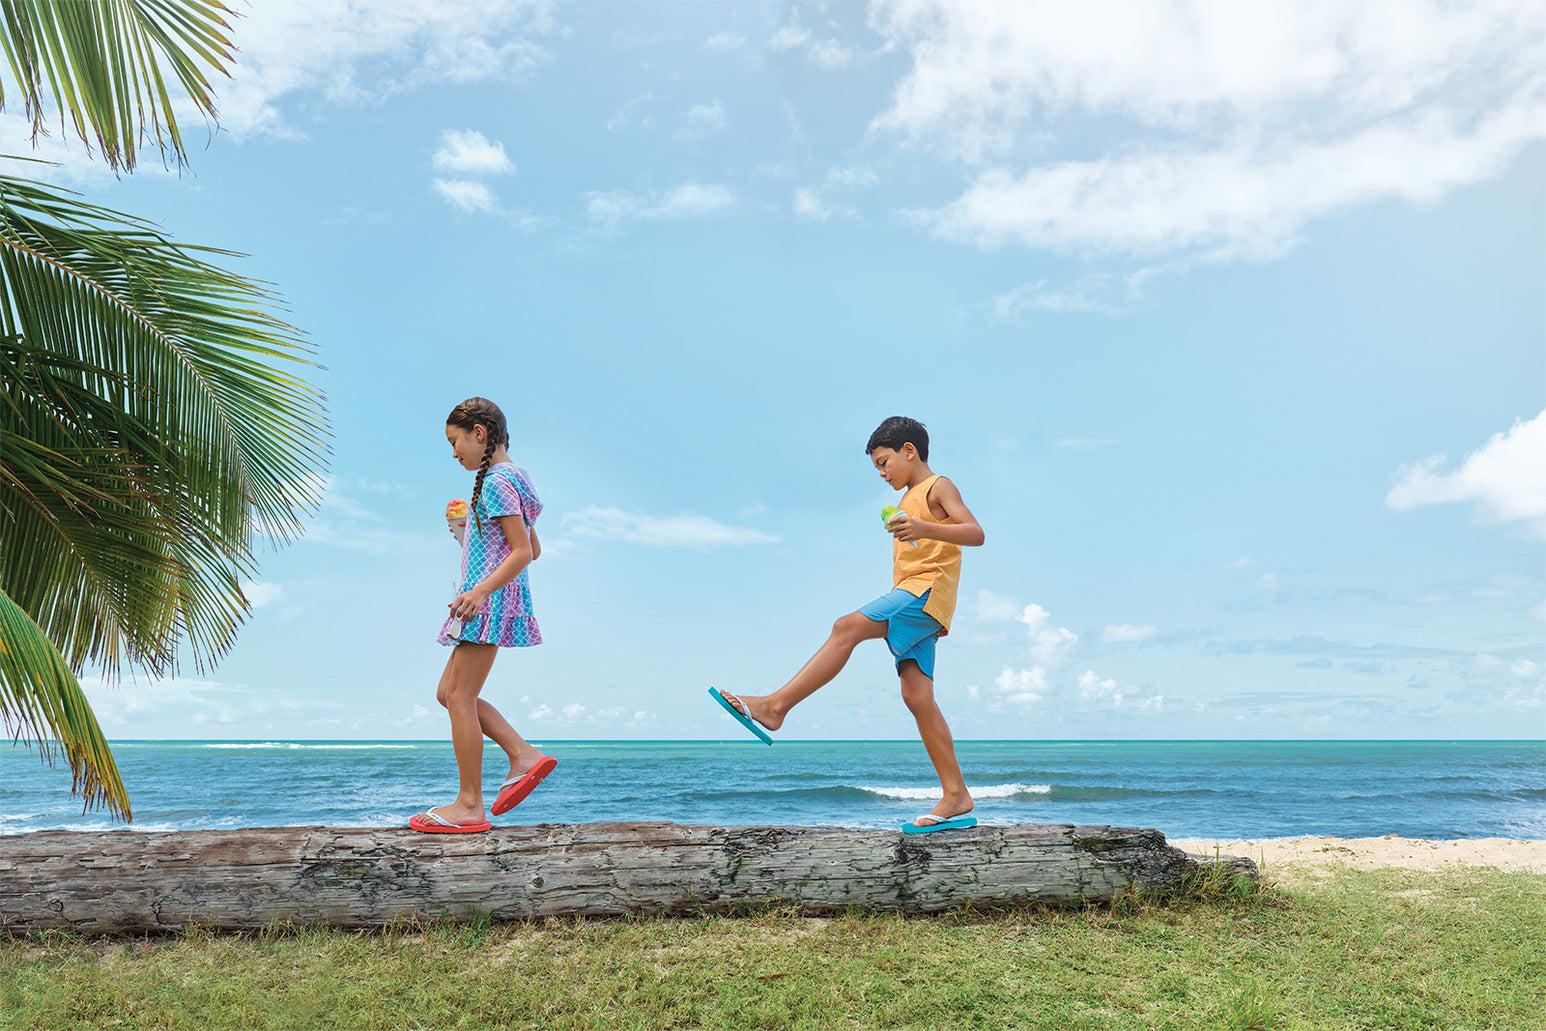 Kids walking on a log on a beach wearing Locals slippahs